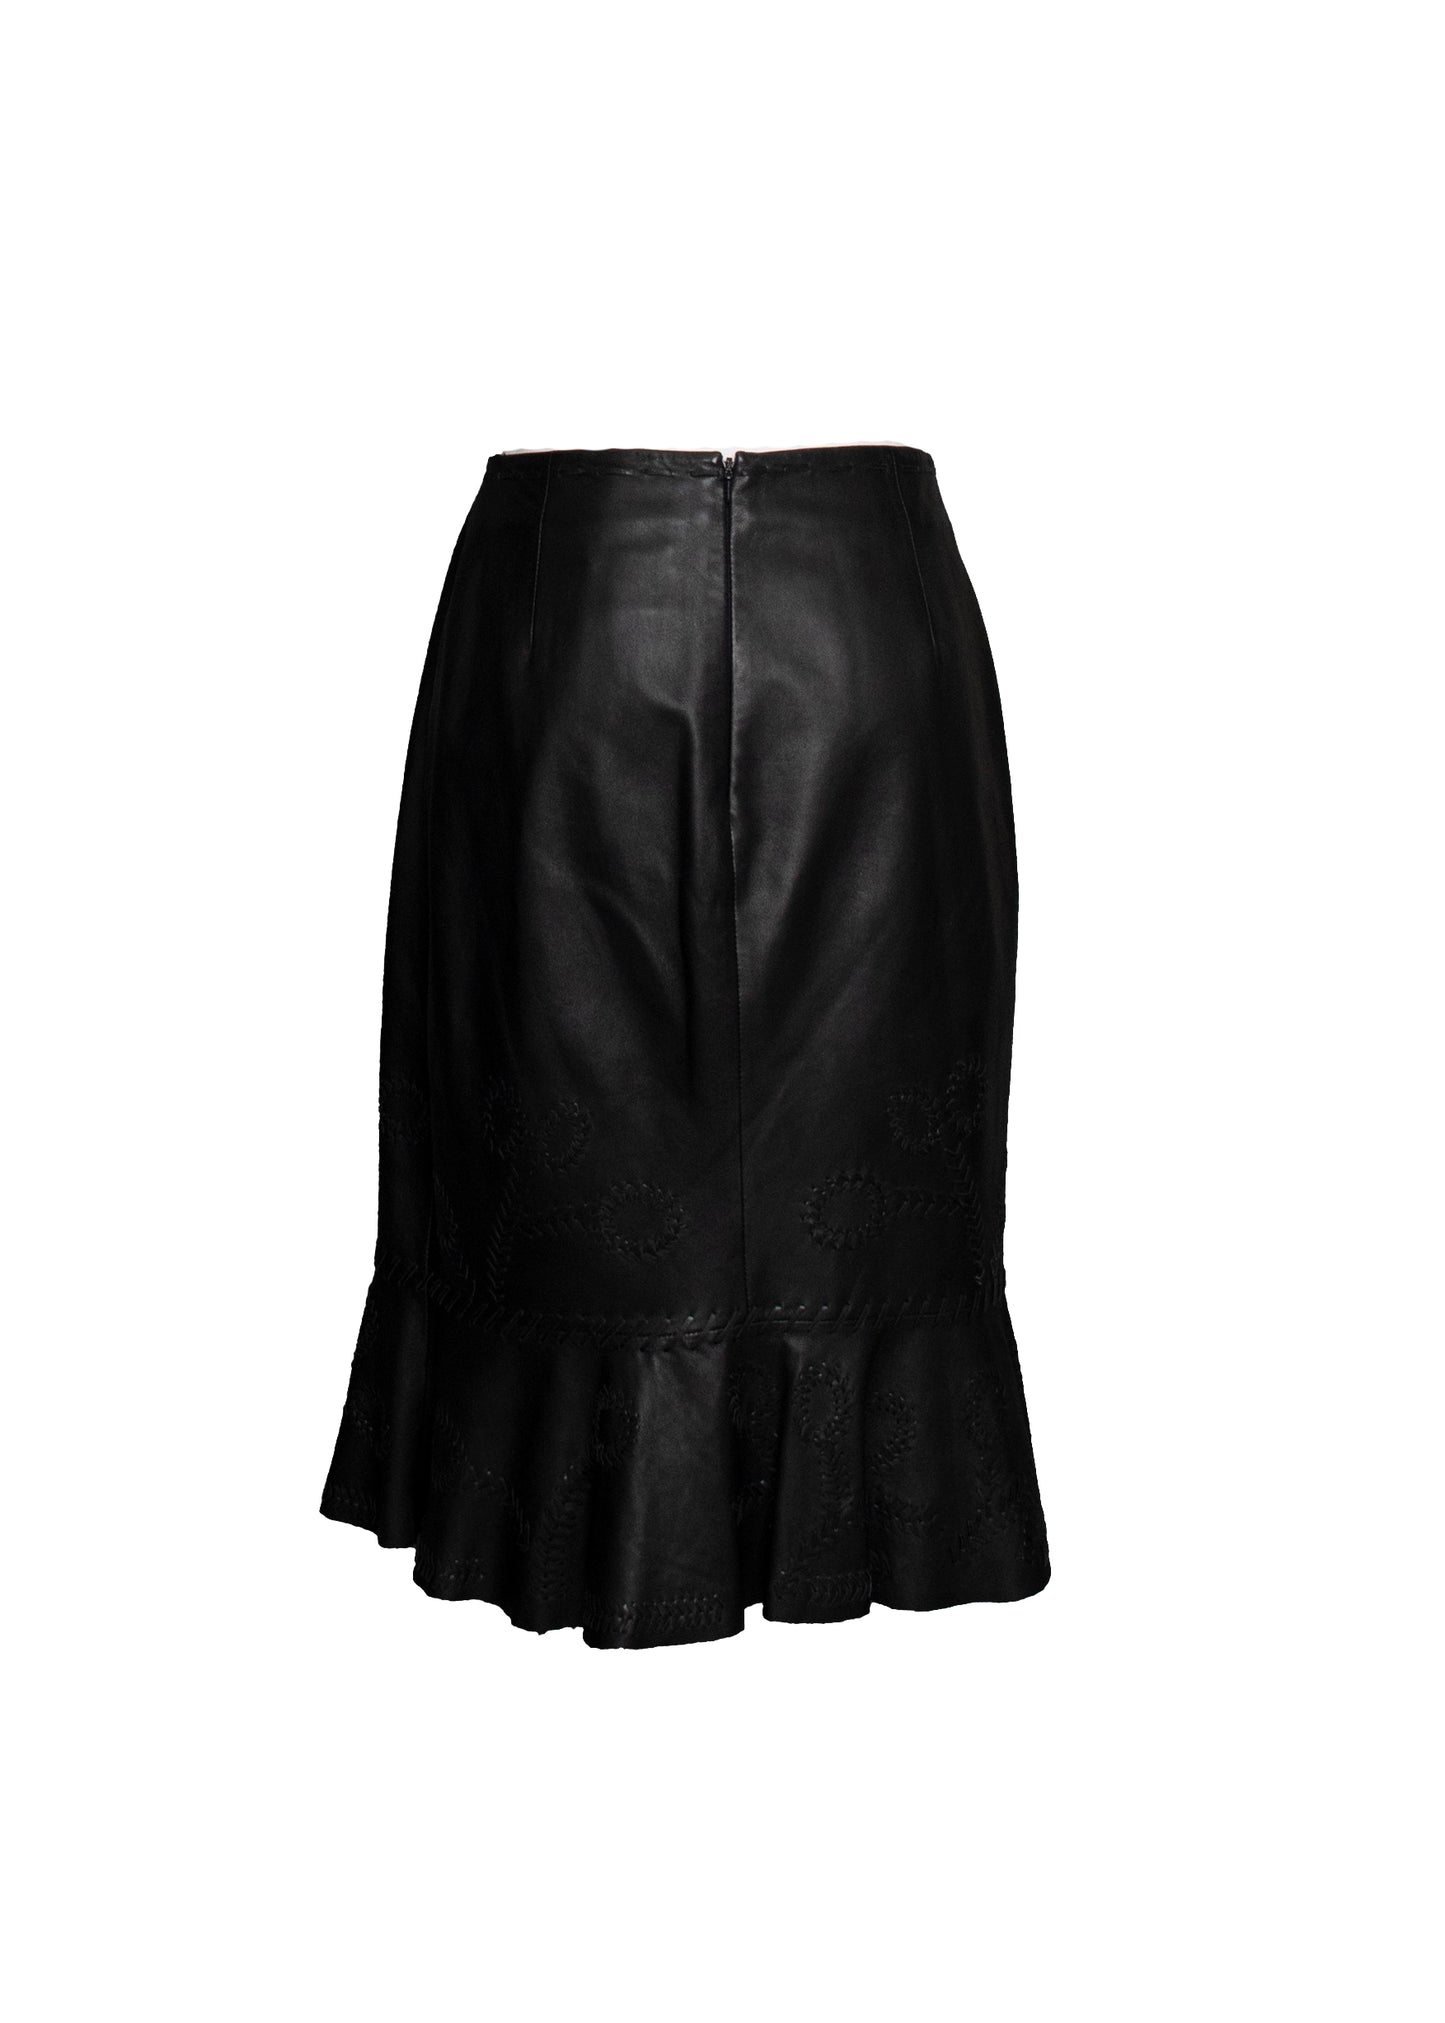 90s Oscar de la Renta Black Leather Skirt M